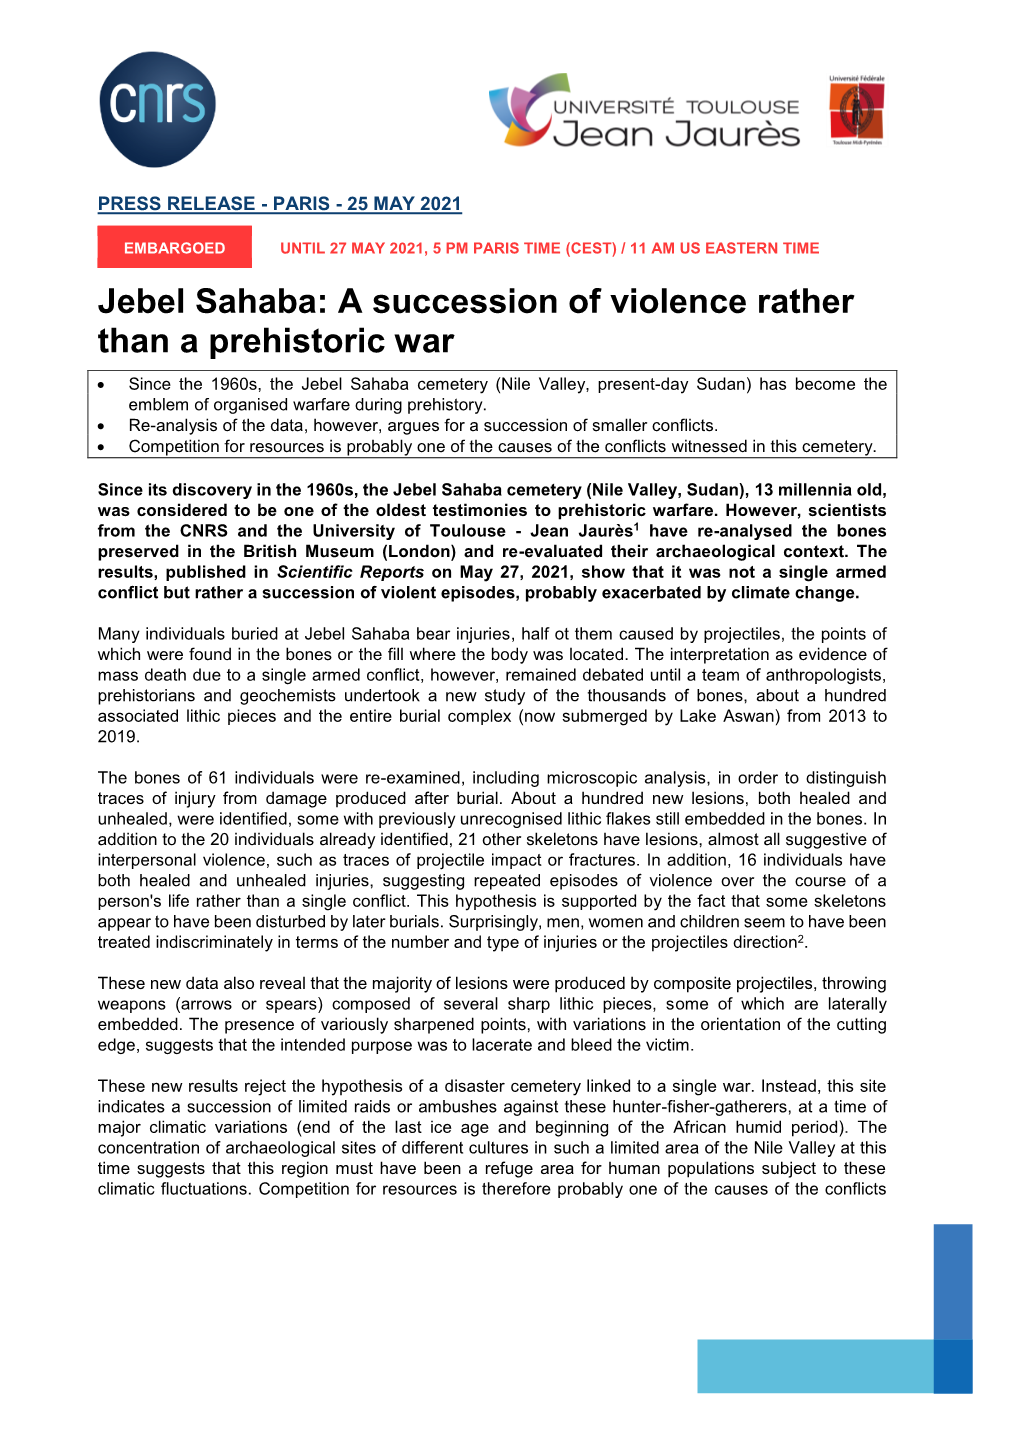 Jebel Sahaba: a Succession of Violence Rather Than a Prehistoric